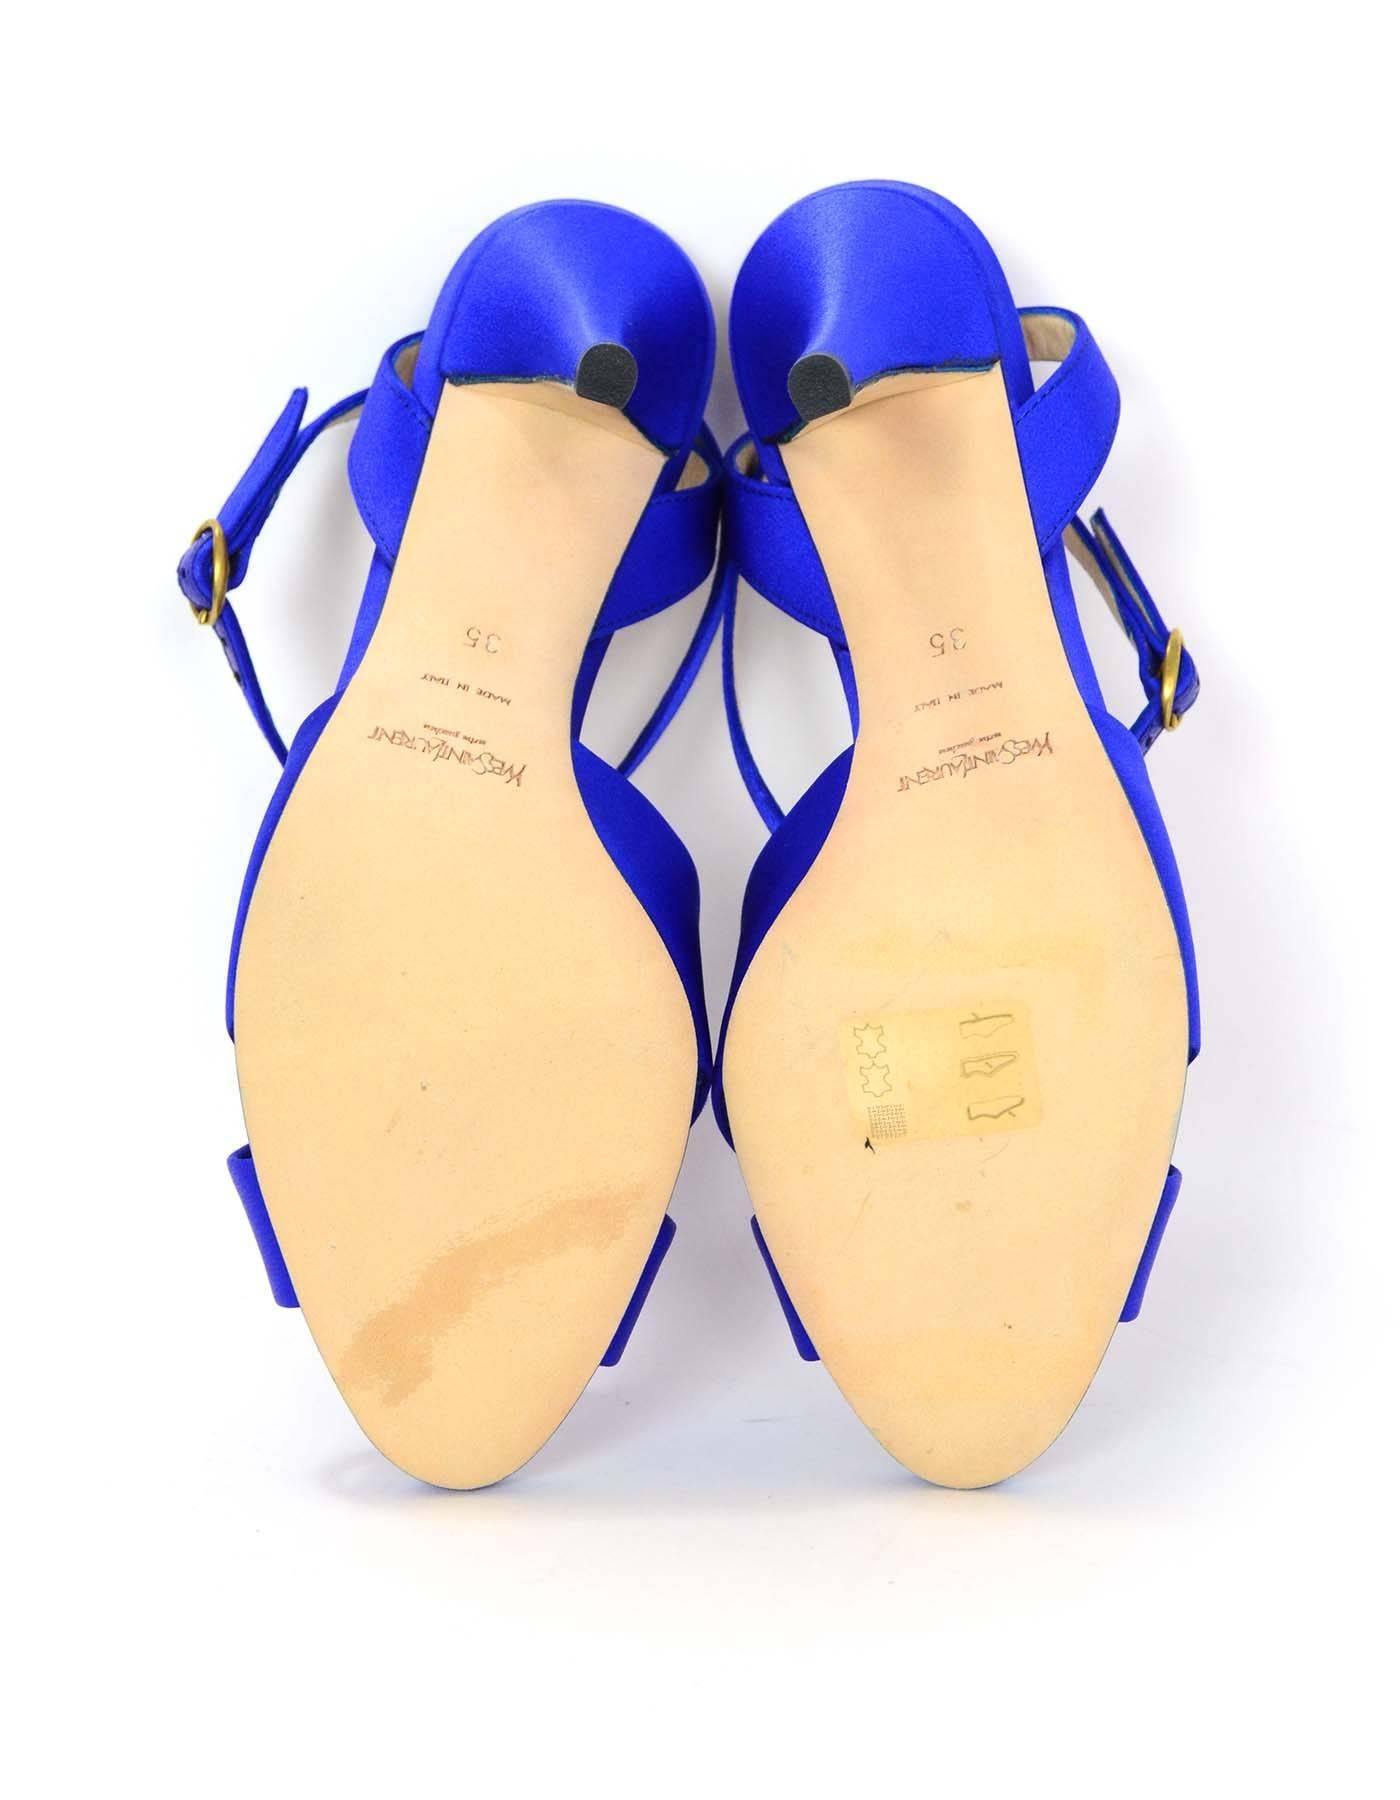 YSL Blue Satin Ankle Strap Sandals Sz 35 2